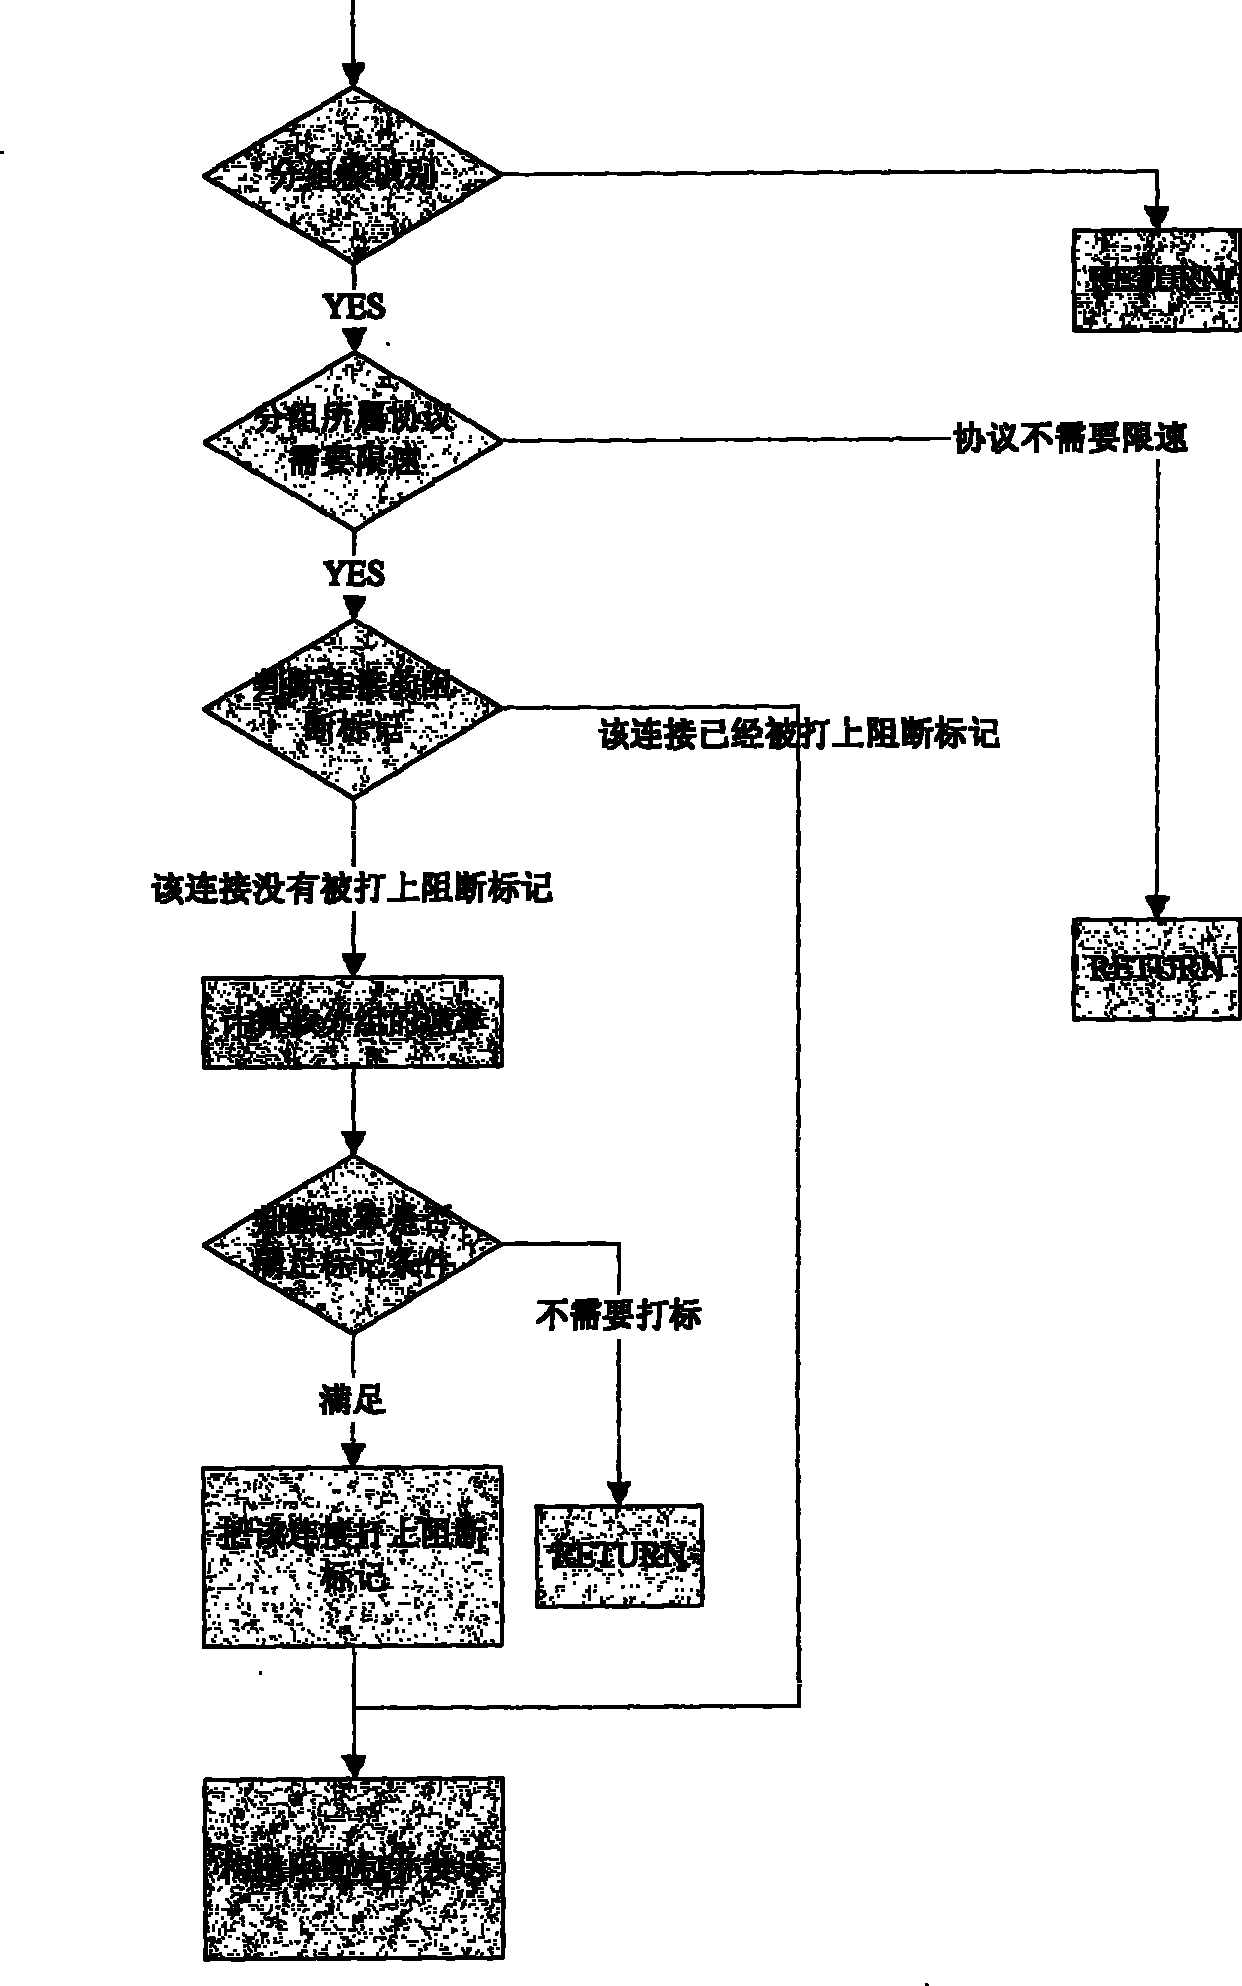 Network flow control method